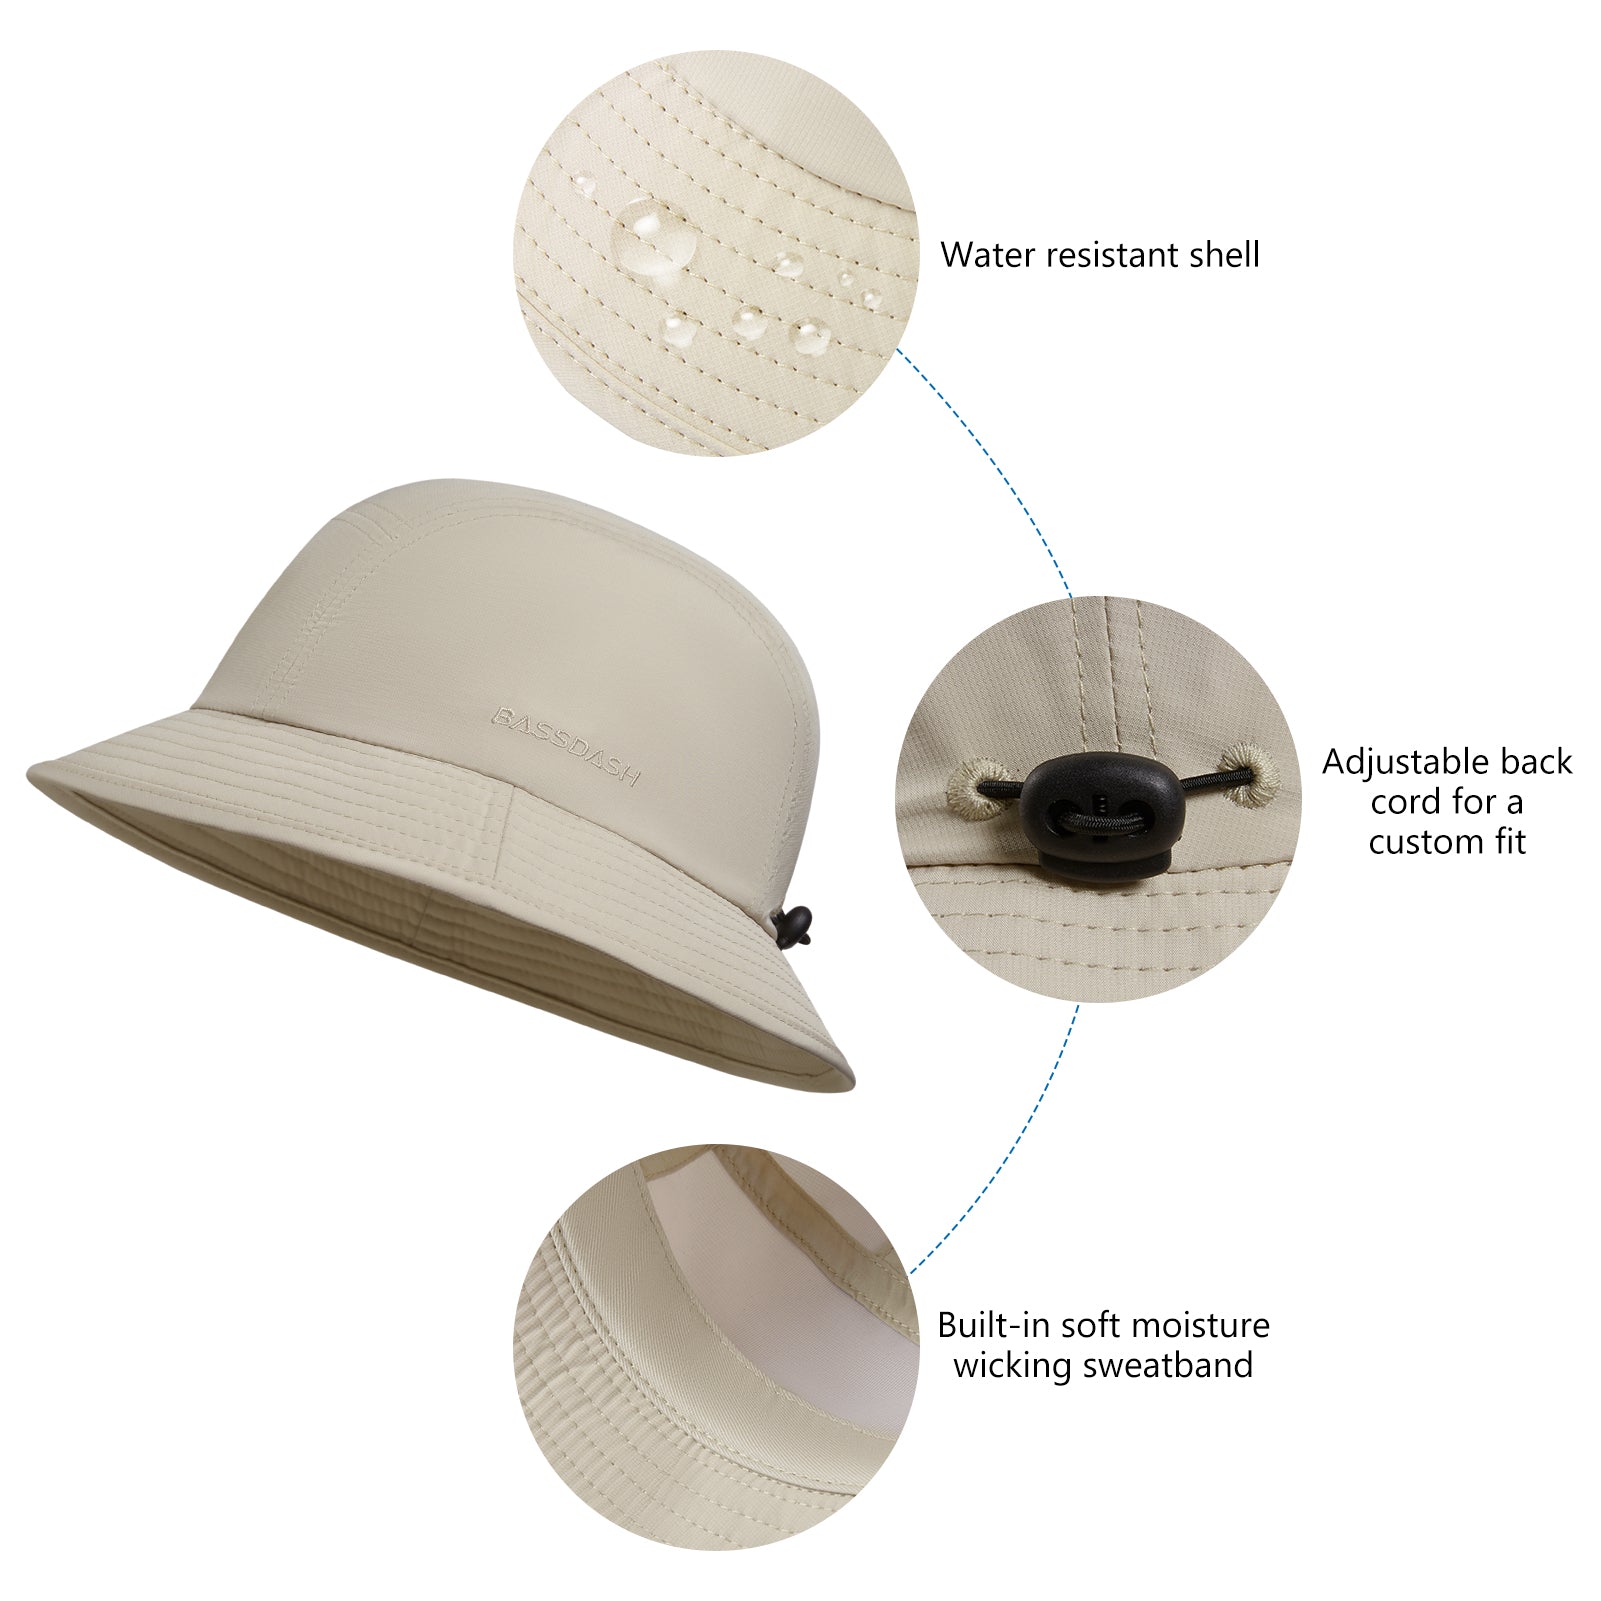 BASSDASH UPF50+ Fishing Bucket Hat for Men Women Lightweight Water Resistant  Packable Outdoor Summer Sun Hats